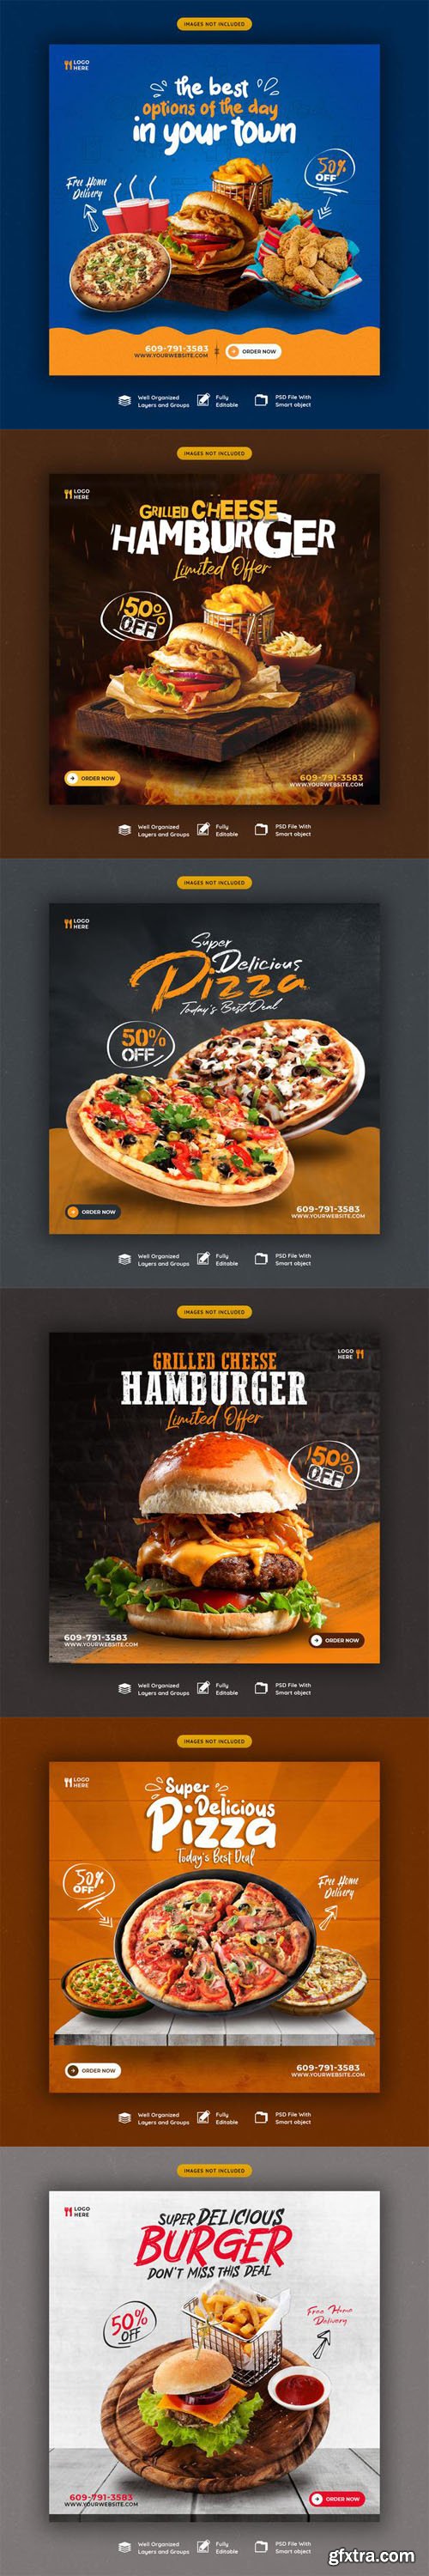 Delicious Food Menu & Restaurant Social Media Banners PSD Templates